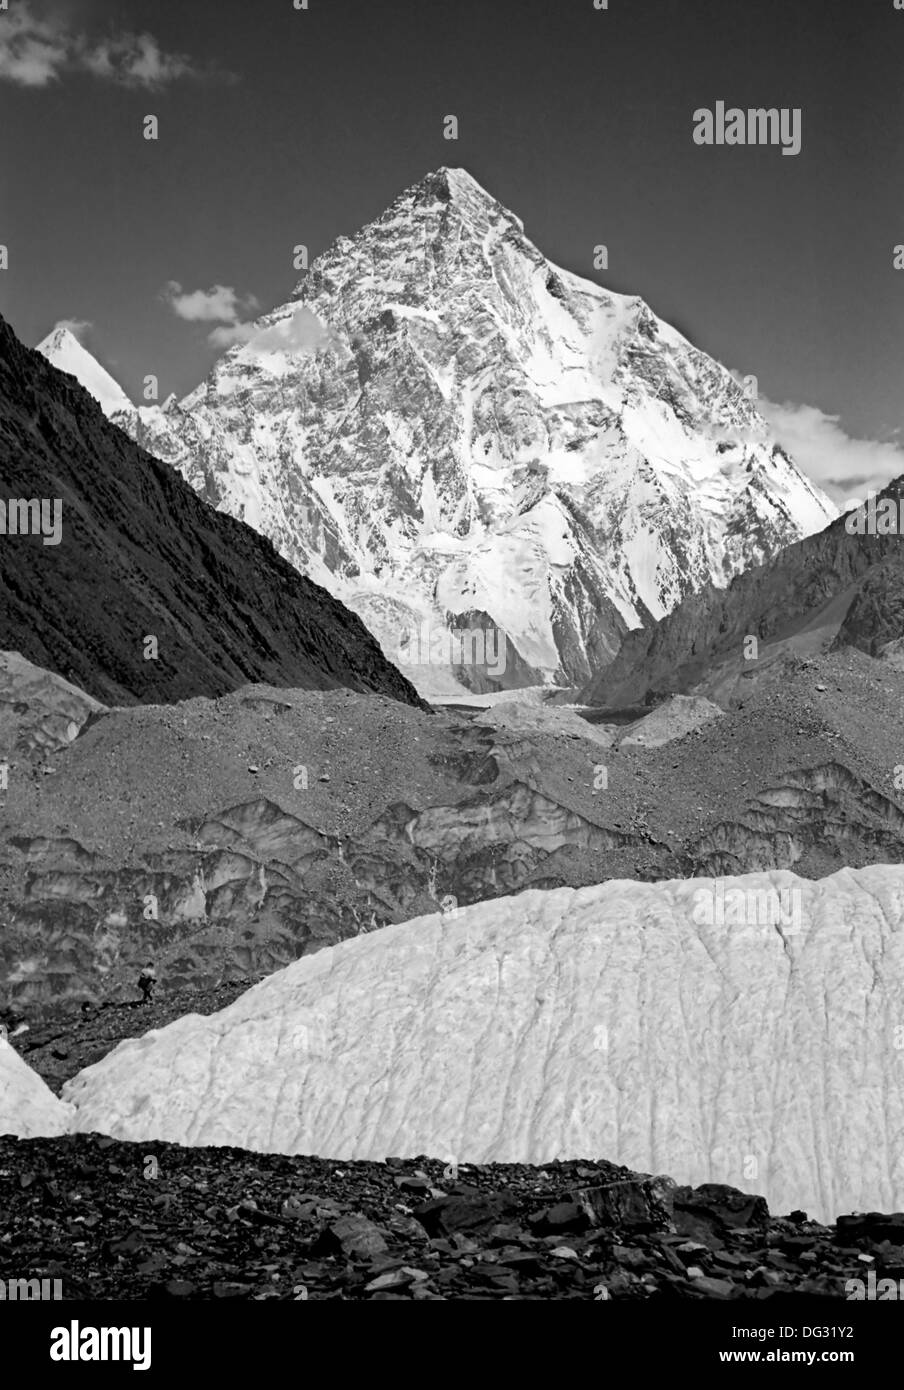 View of K2, Chogori peak (8611 m) from Baltoro glacier in Pakistan. Film scan. Stock Photo